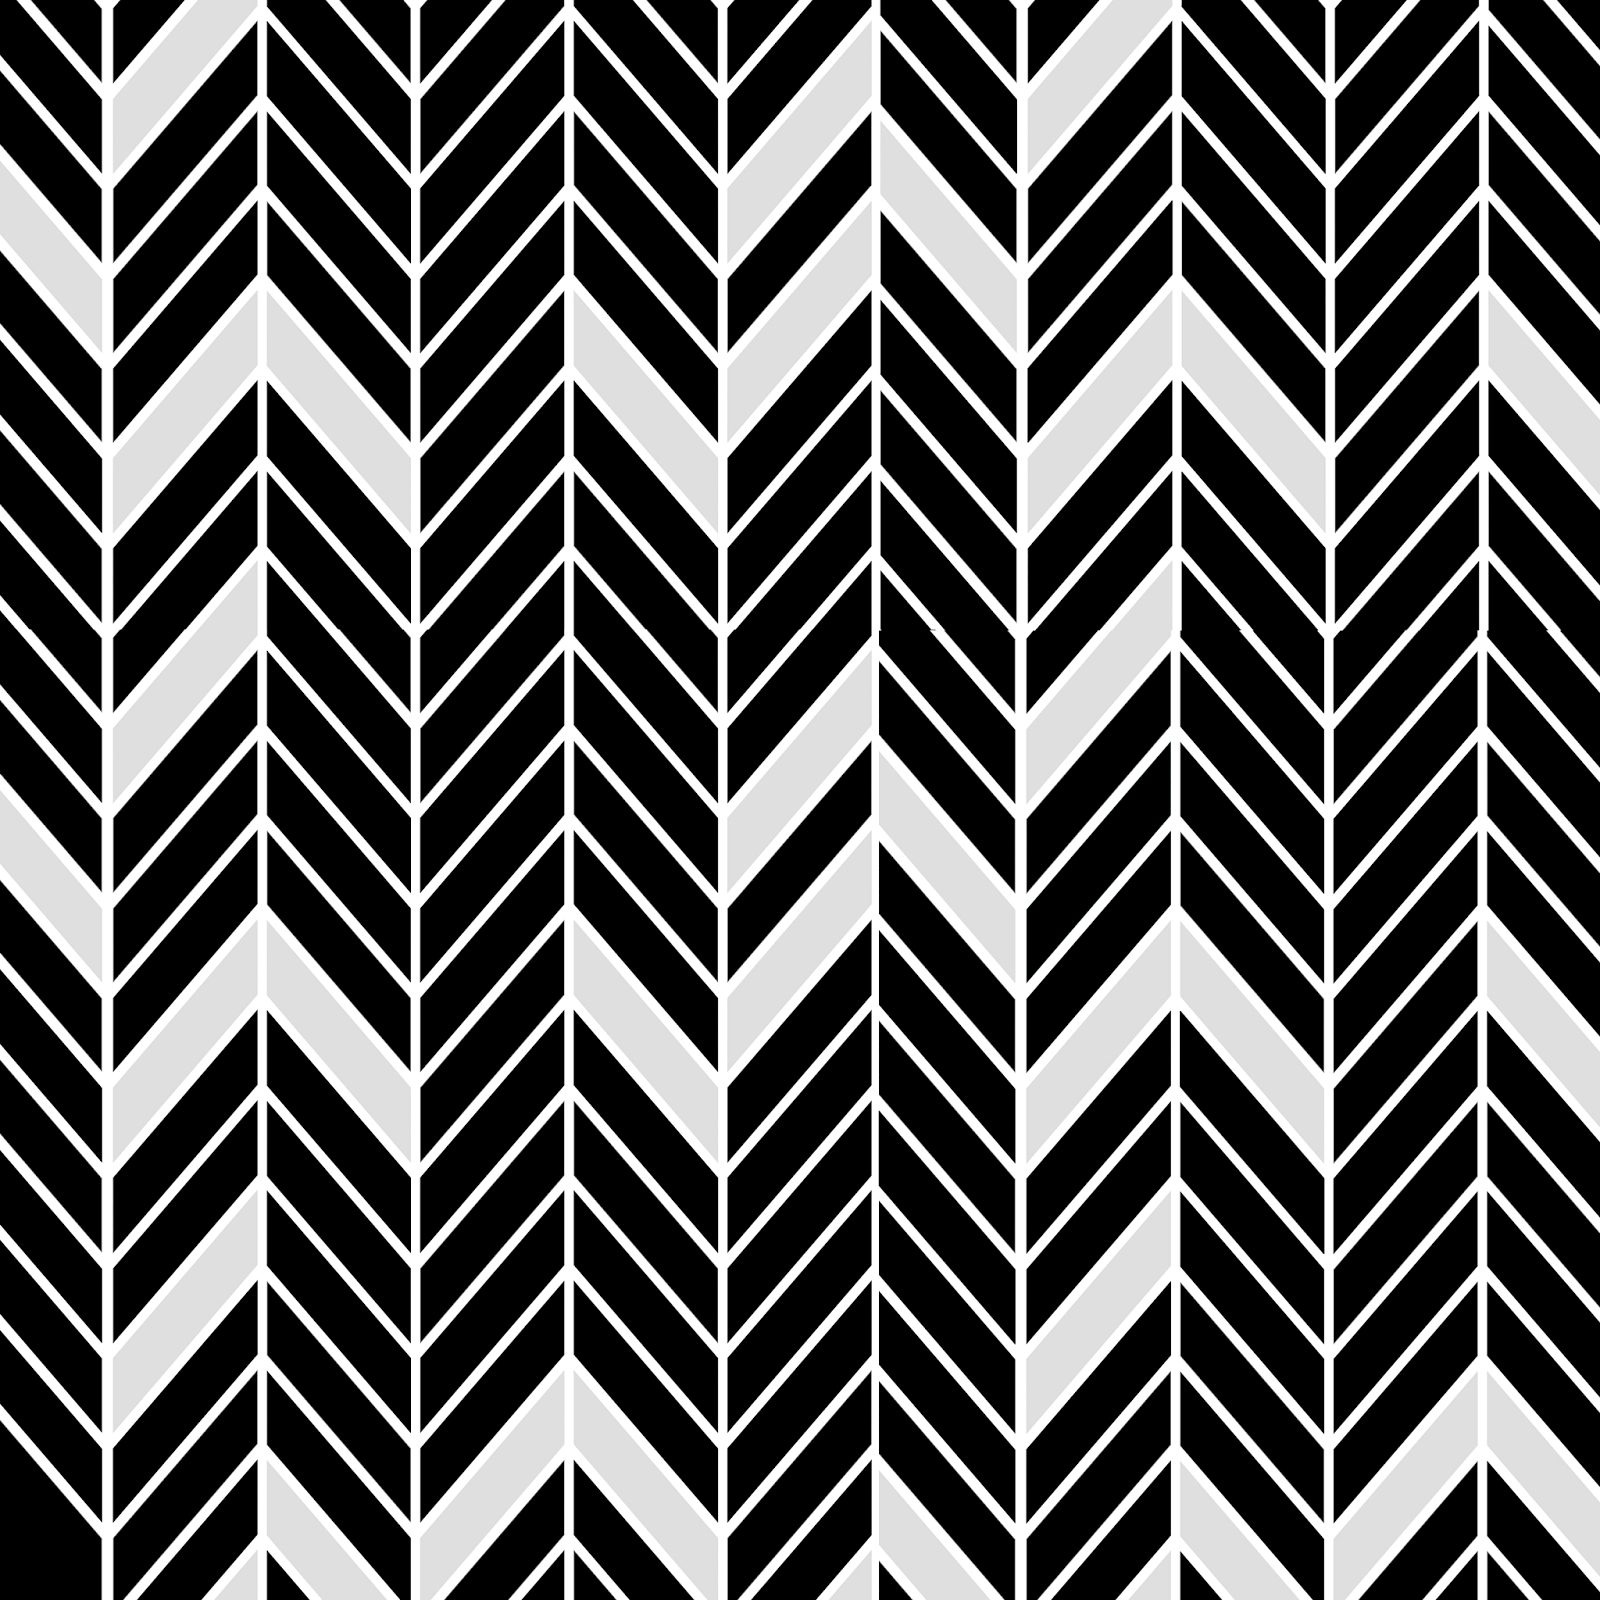 Uncategorized. Black And White Chevron Wallpaper 